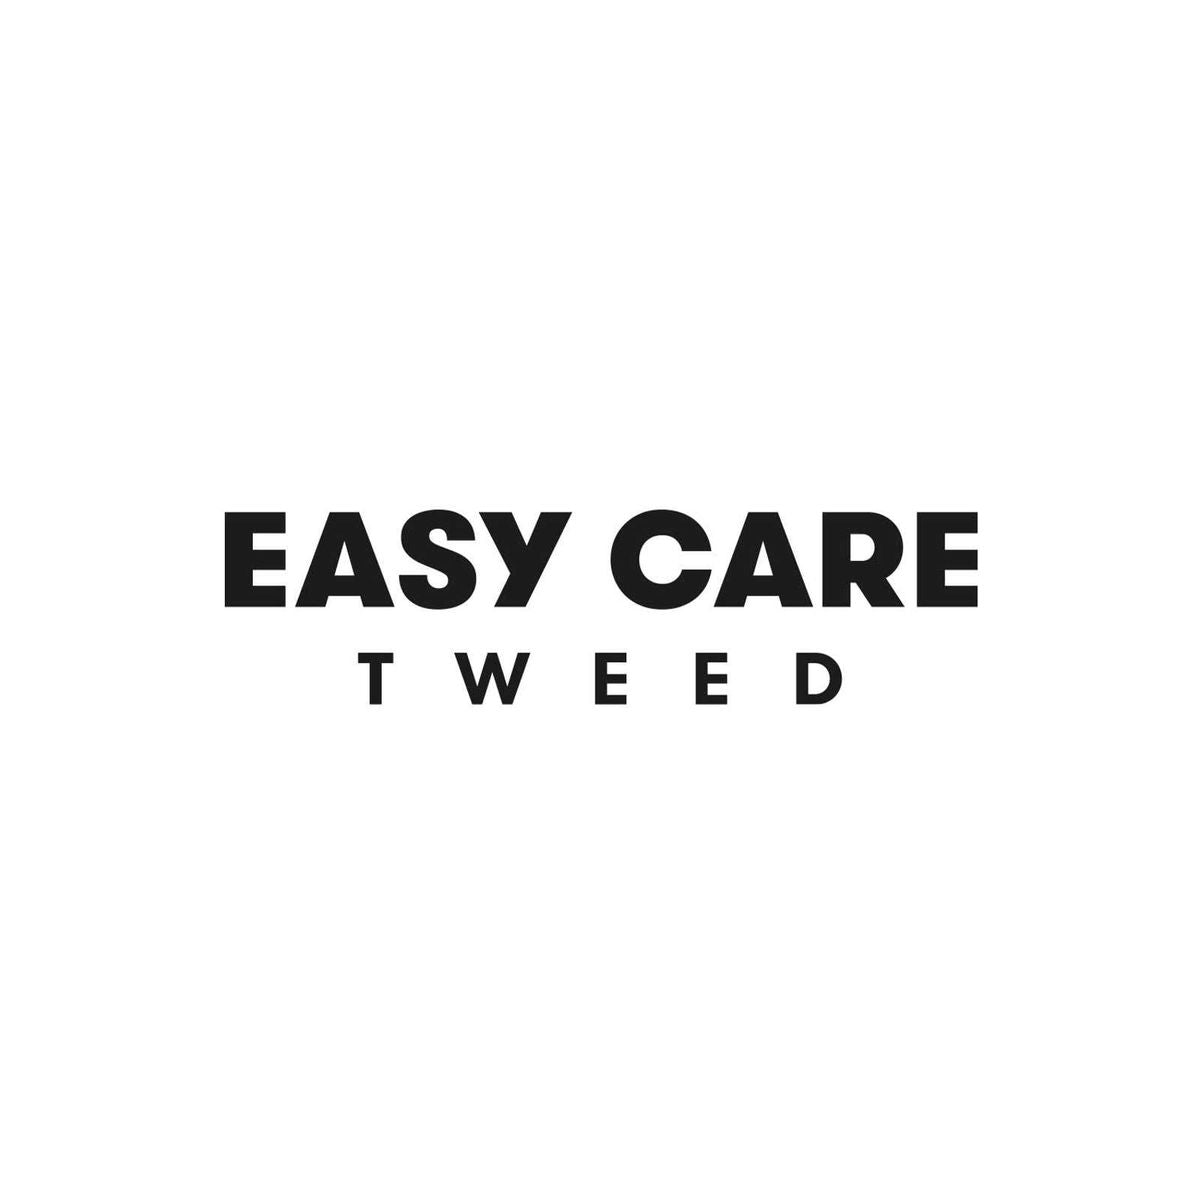 Easy Care Tweed